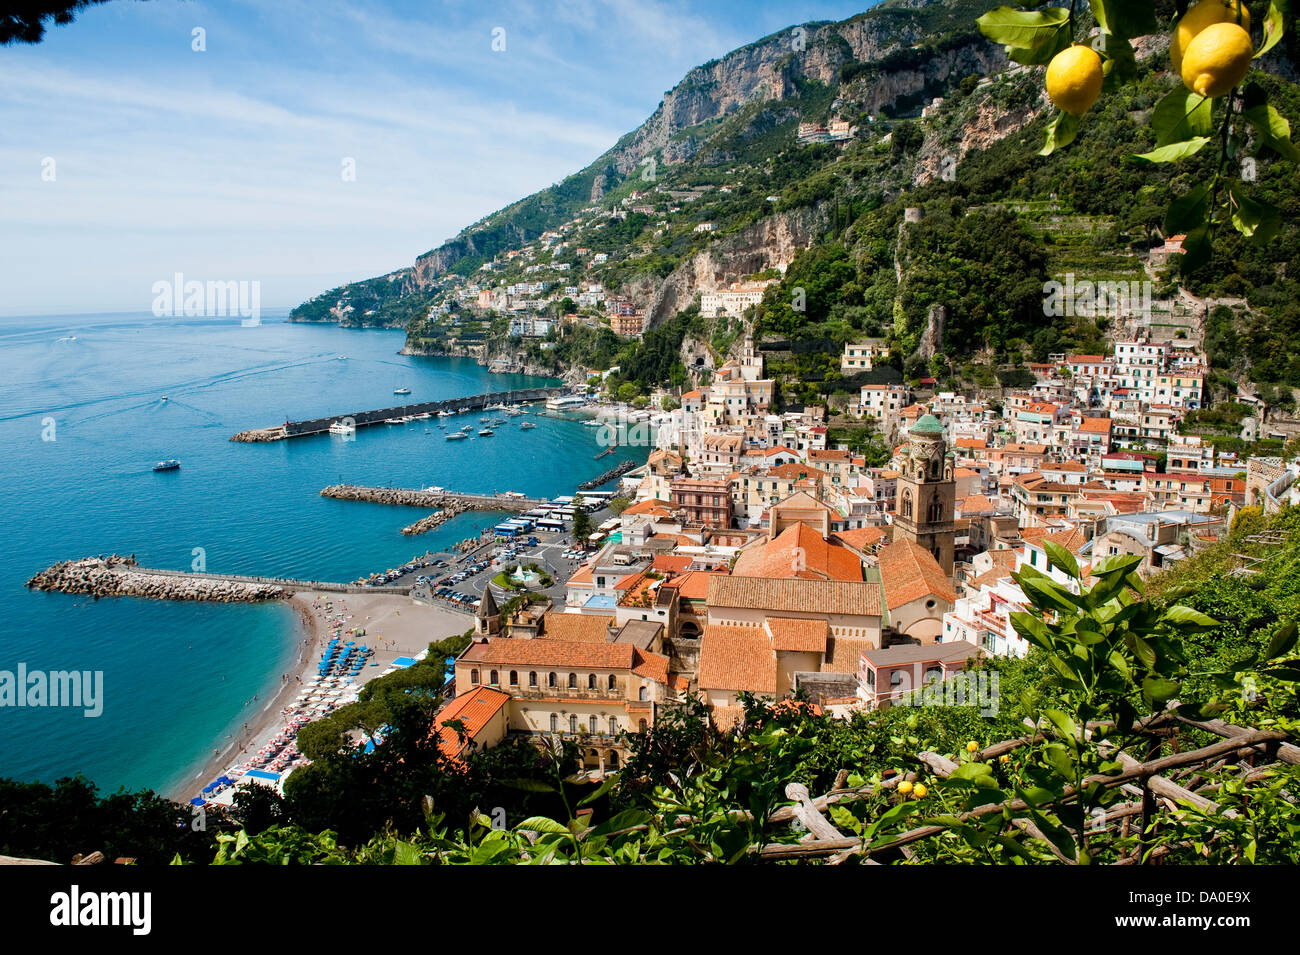 View over the seaside village of Amalfi, on the Unesco World Heritage listed Amalfi Coast, Italy Stock Photo